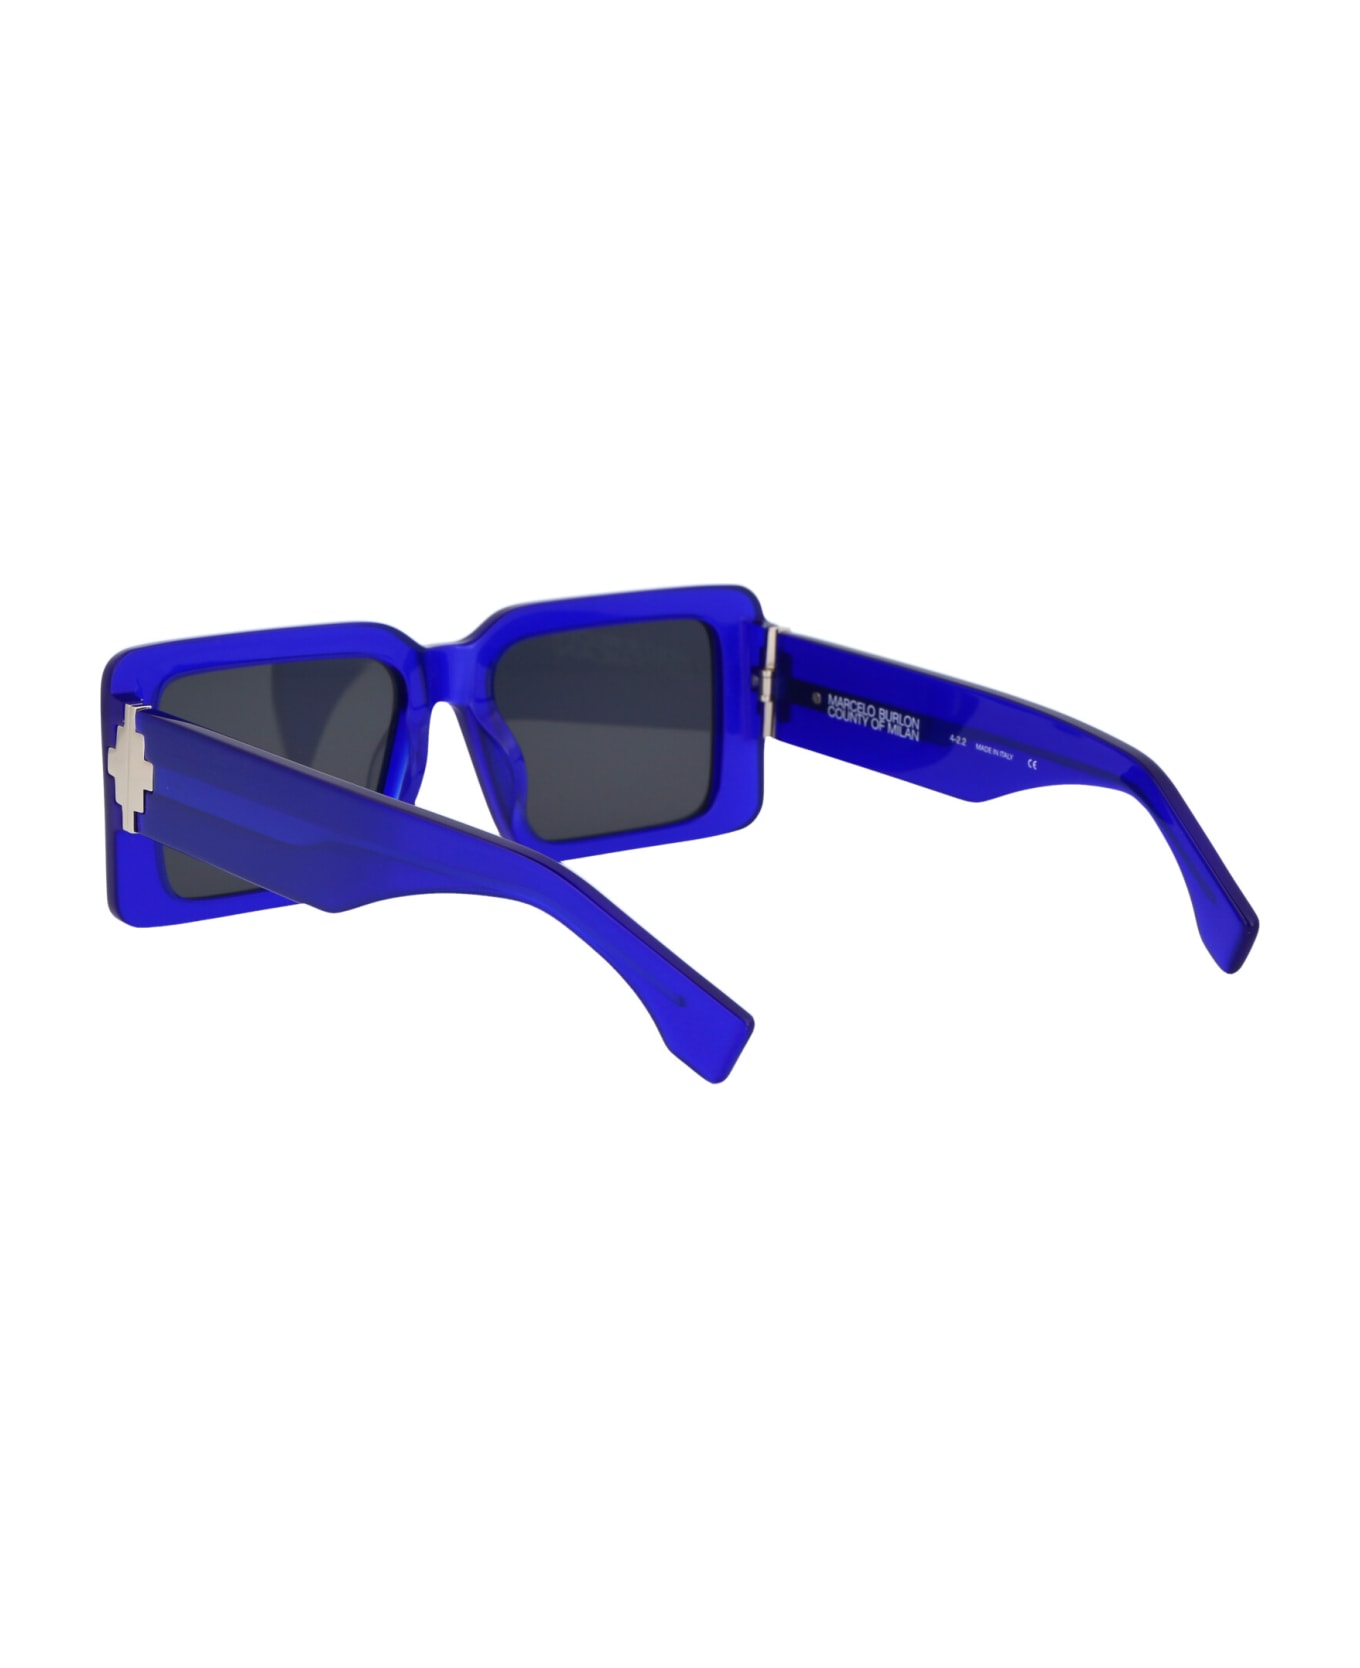 Marcelo Burlon Sicomoro Sunglasses - 4507 BLUE